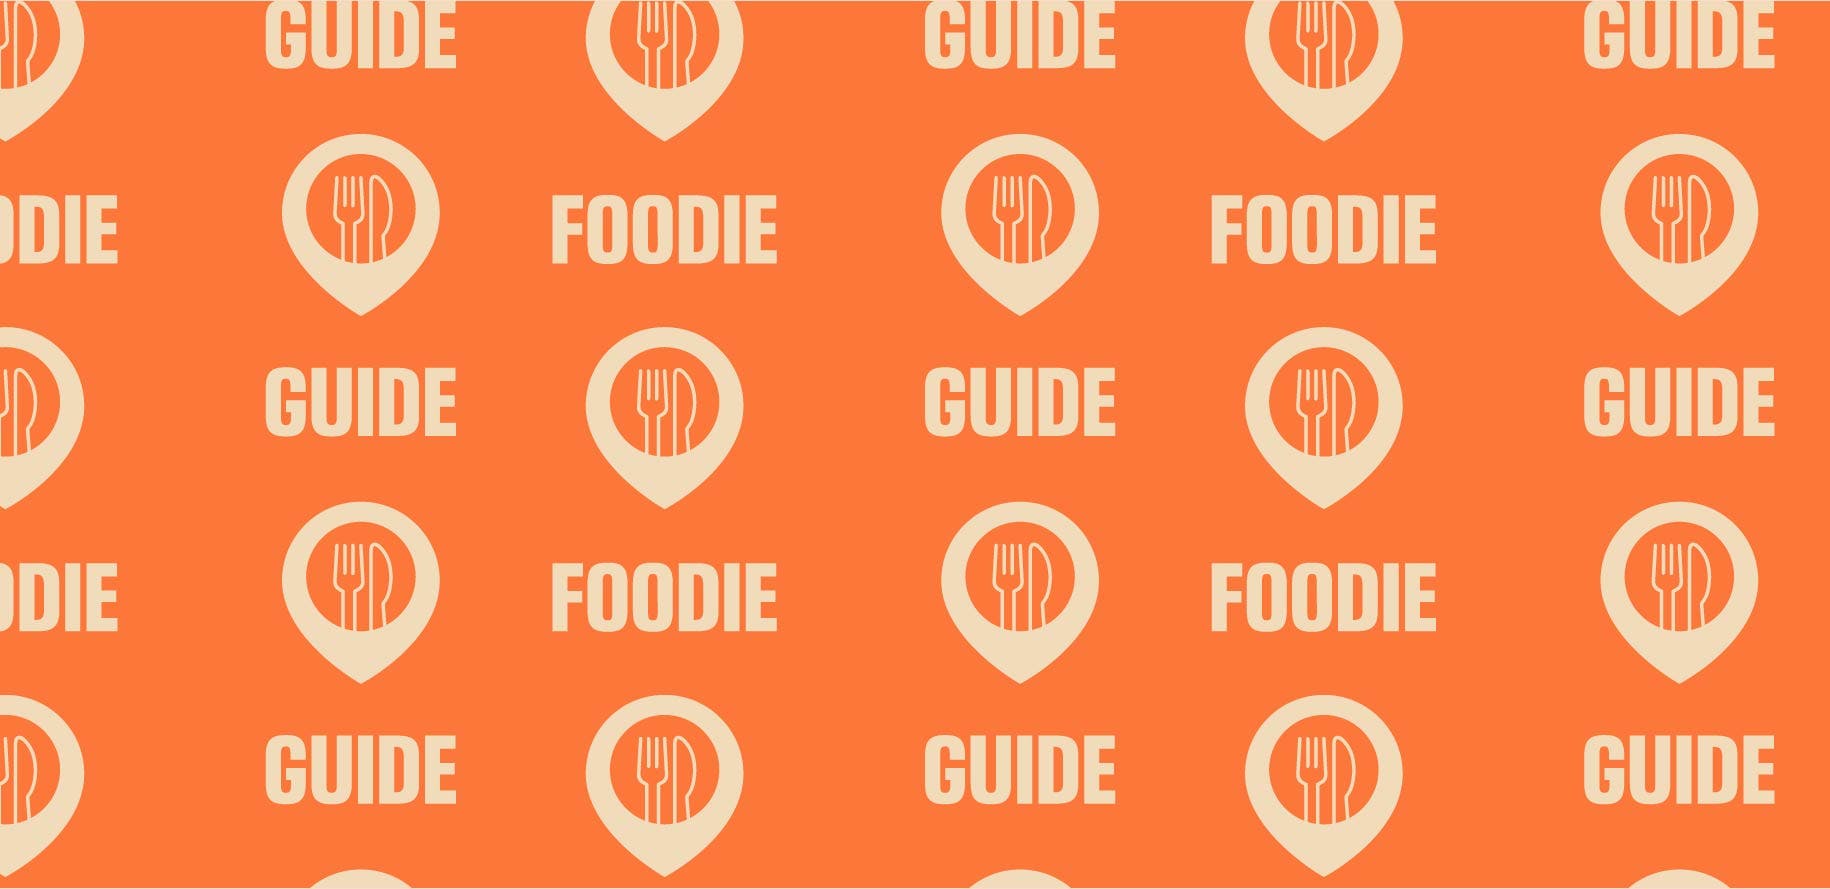 Foodie Guide Su